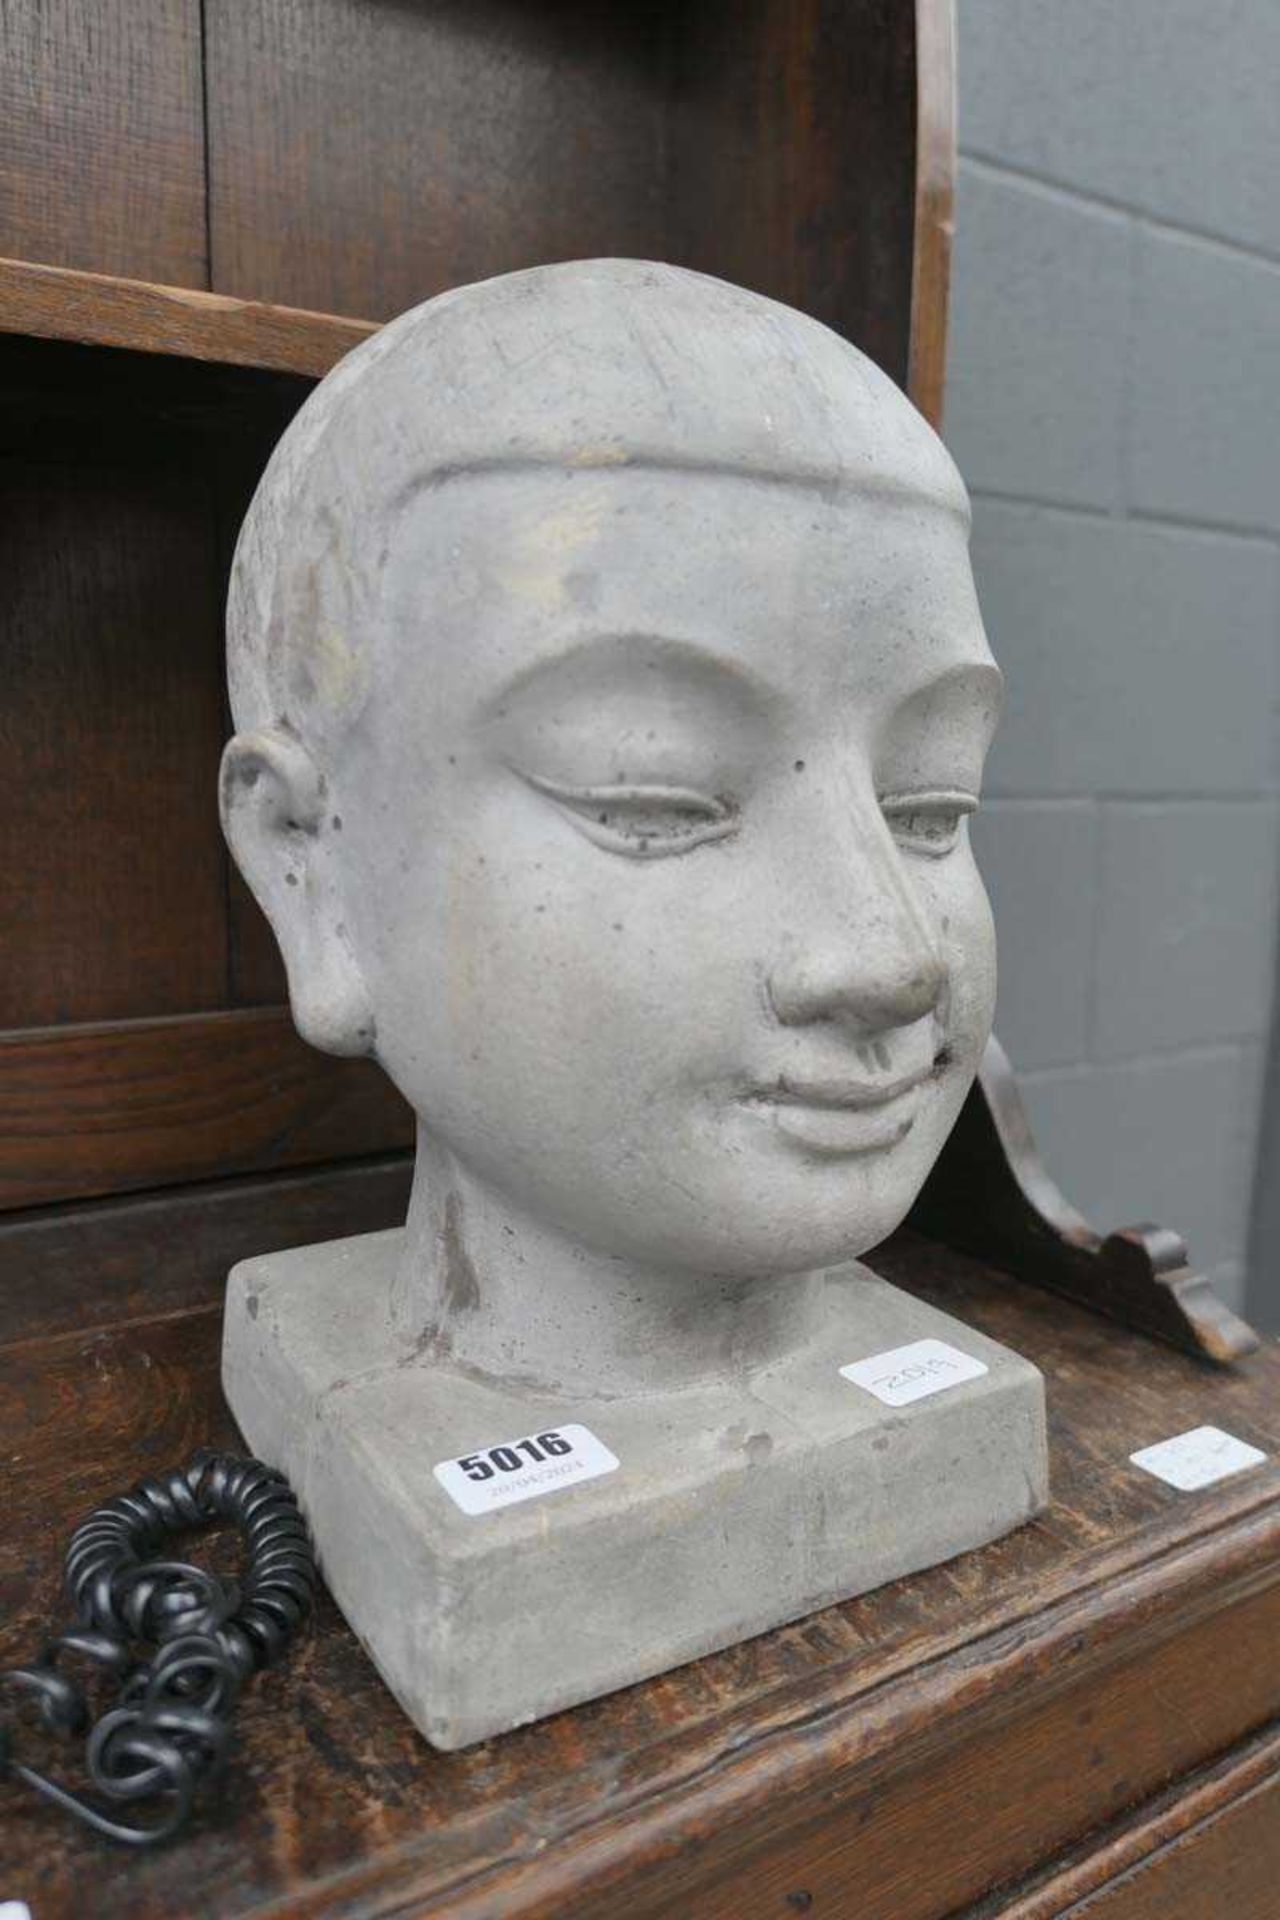 Plaster figure of Buddha's head